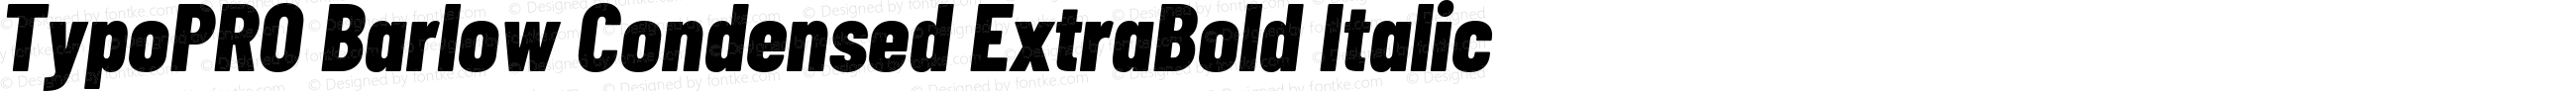 TypoPRO Barlow Condensed ExtraBold Italic